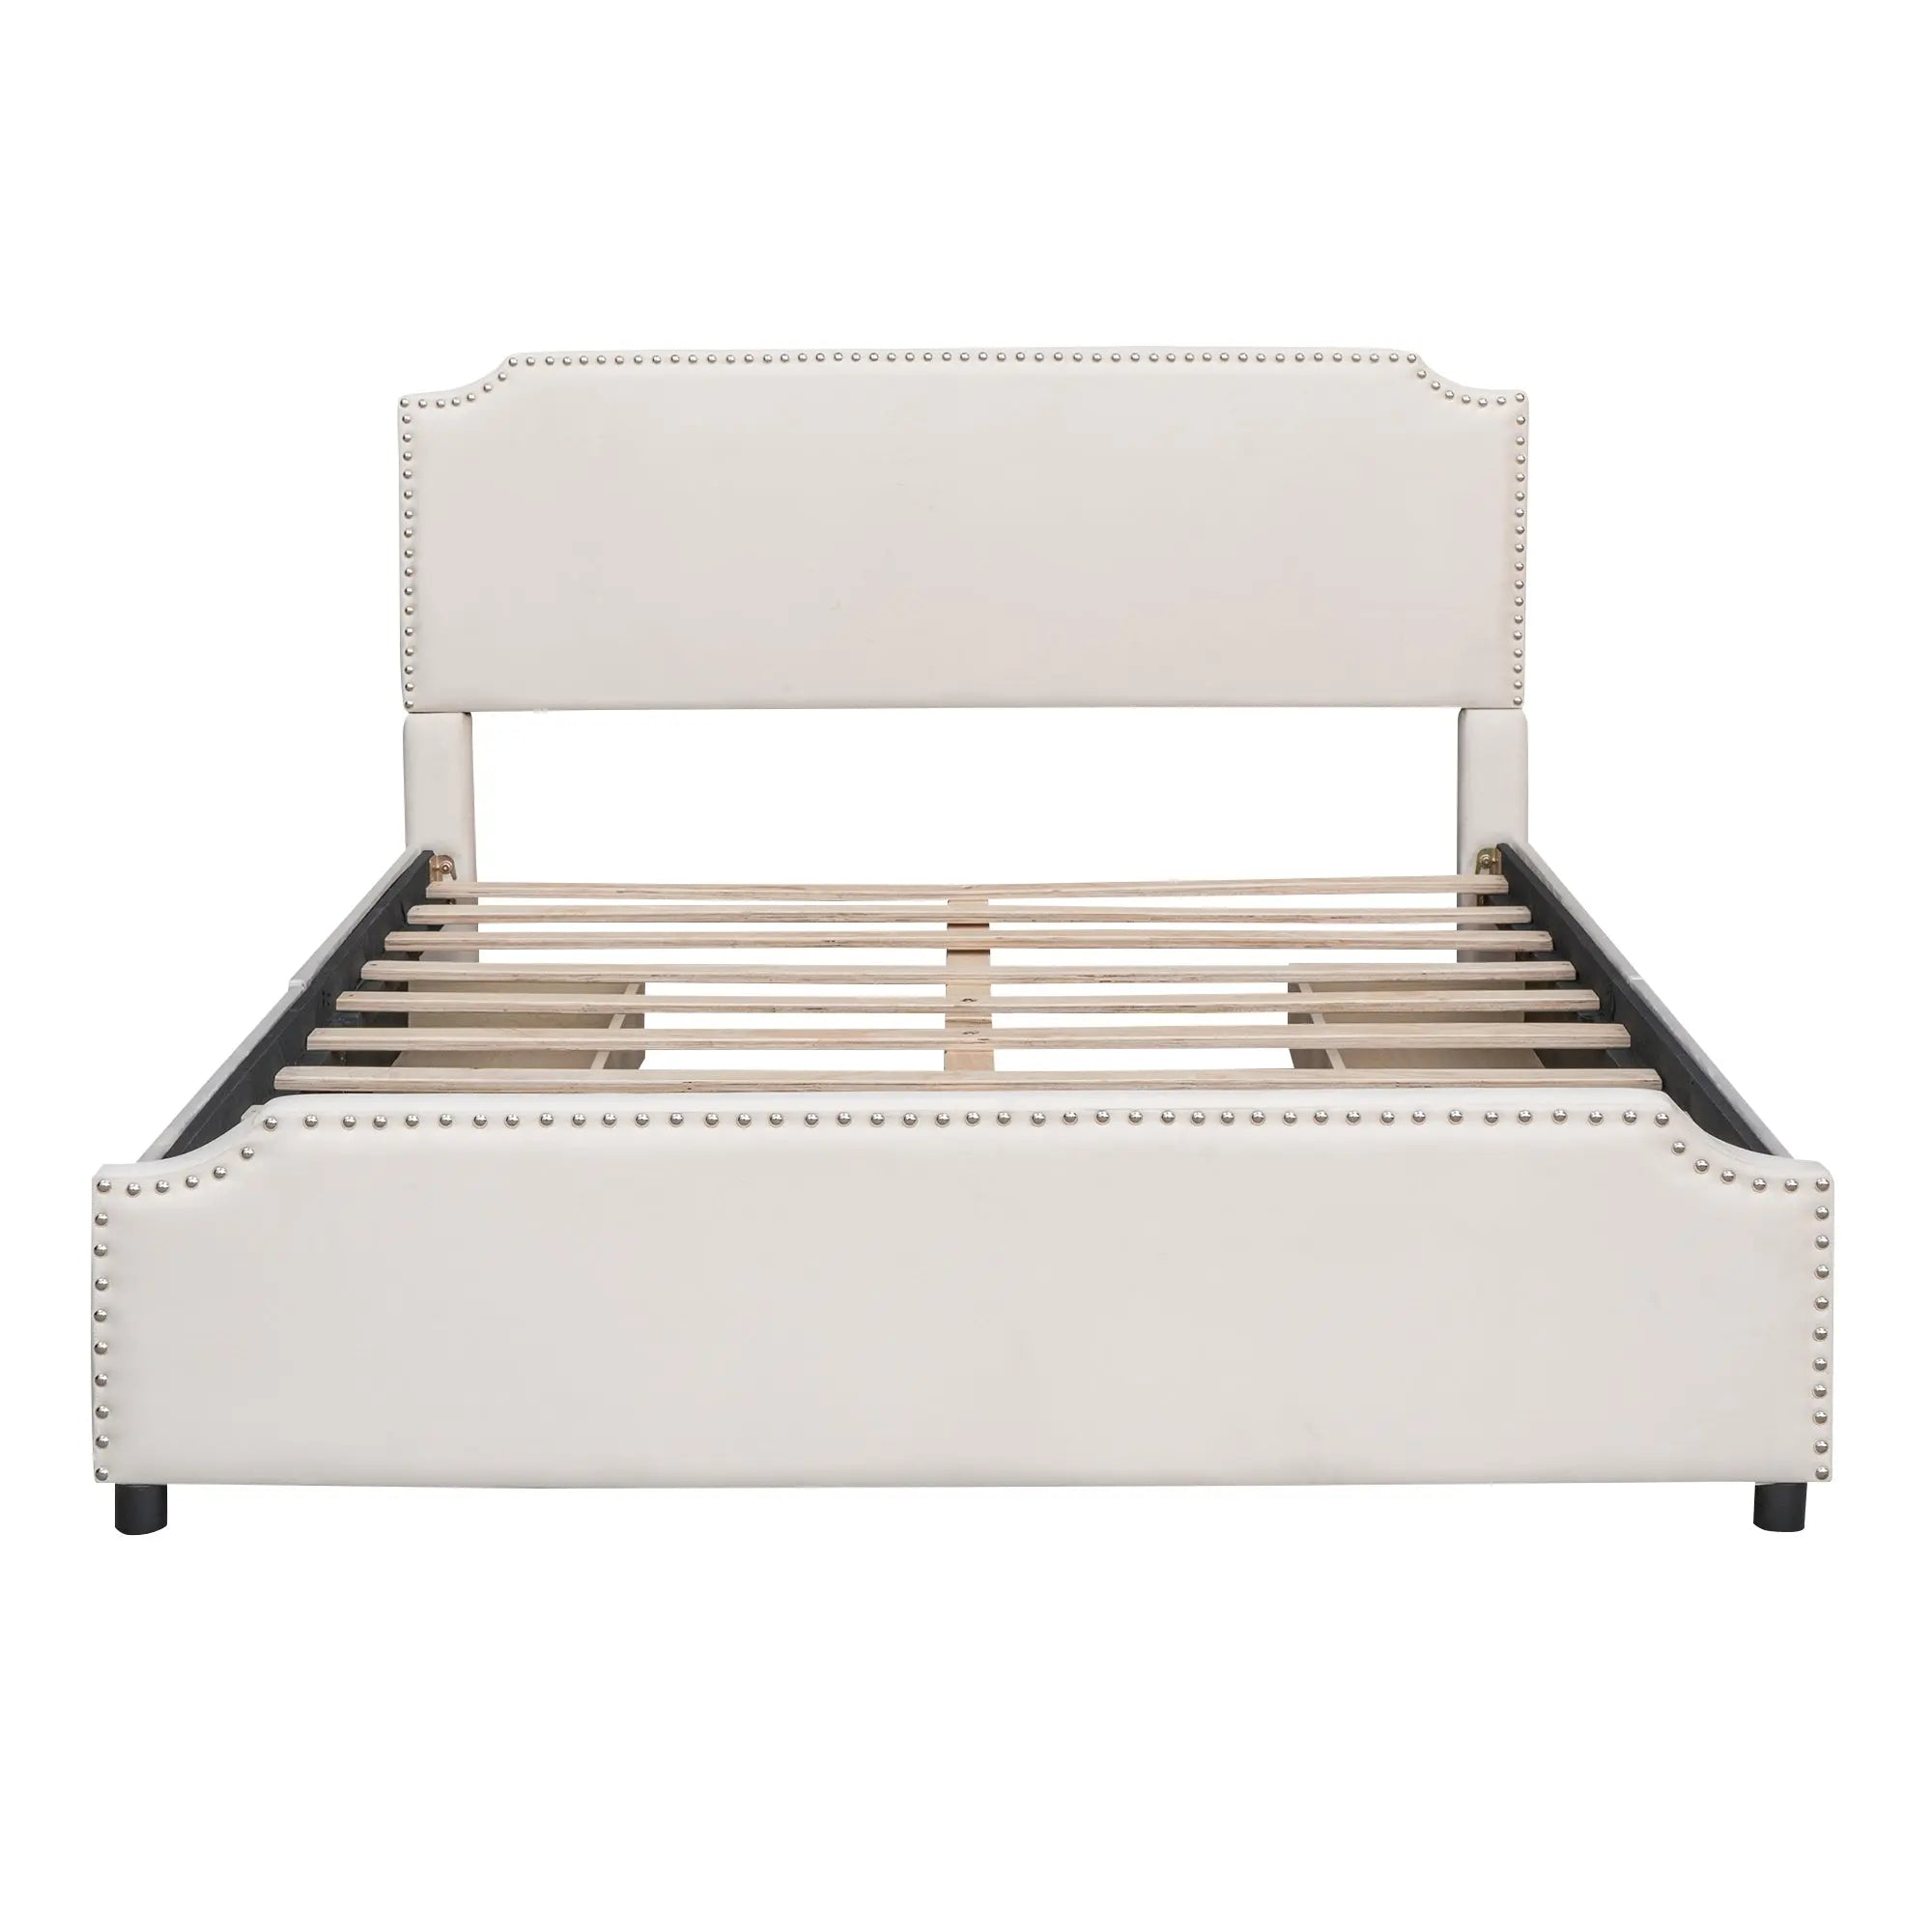 Bellemave® Queen Size Velvet Upholstered Platform Bed with 4 Drawers